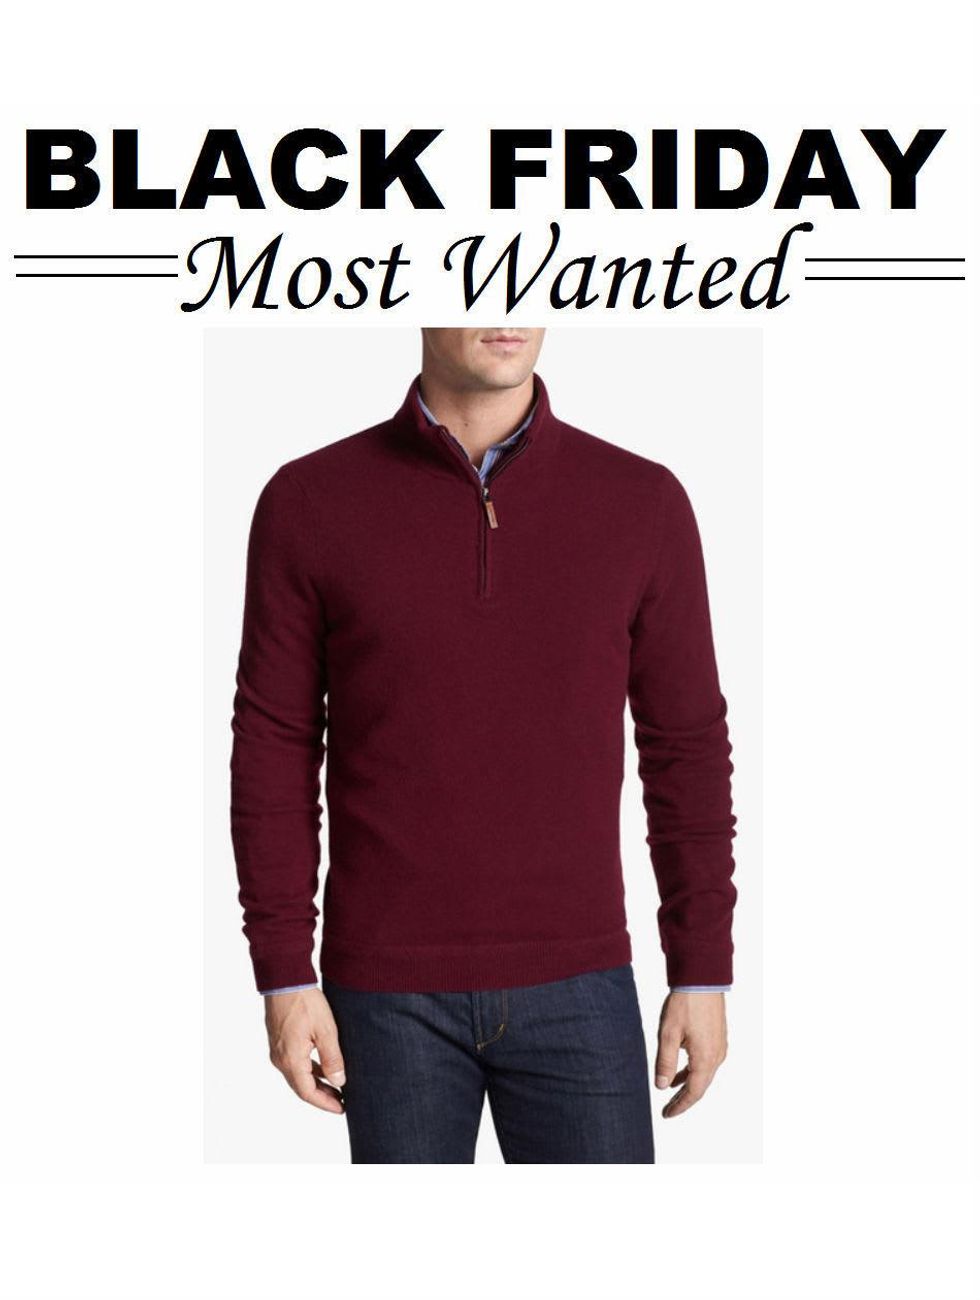 Black Friday men's sweater